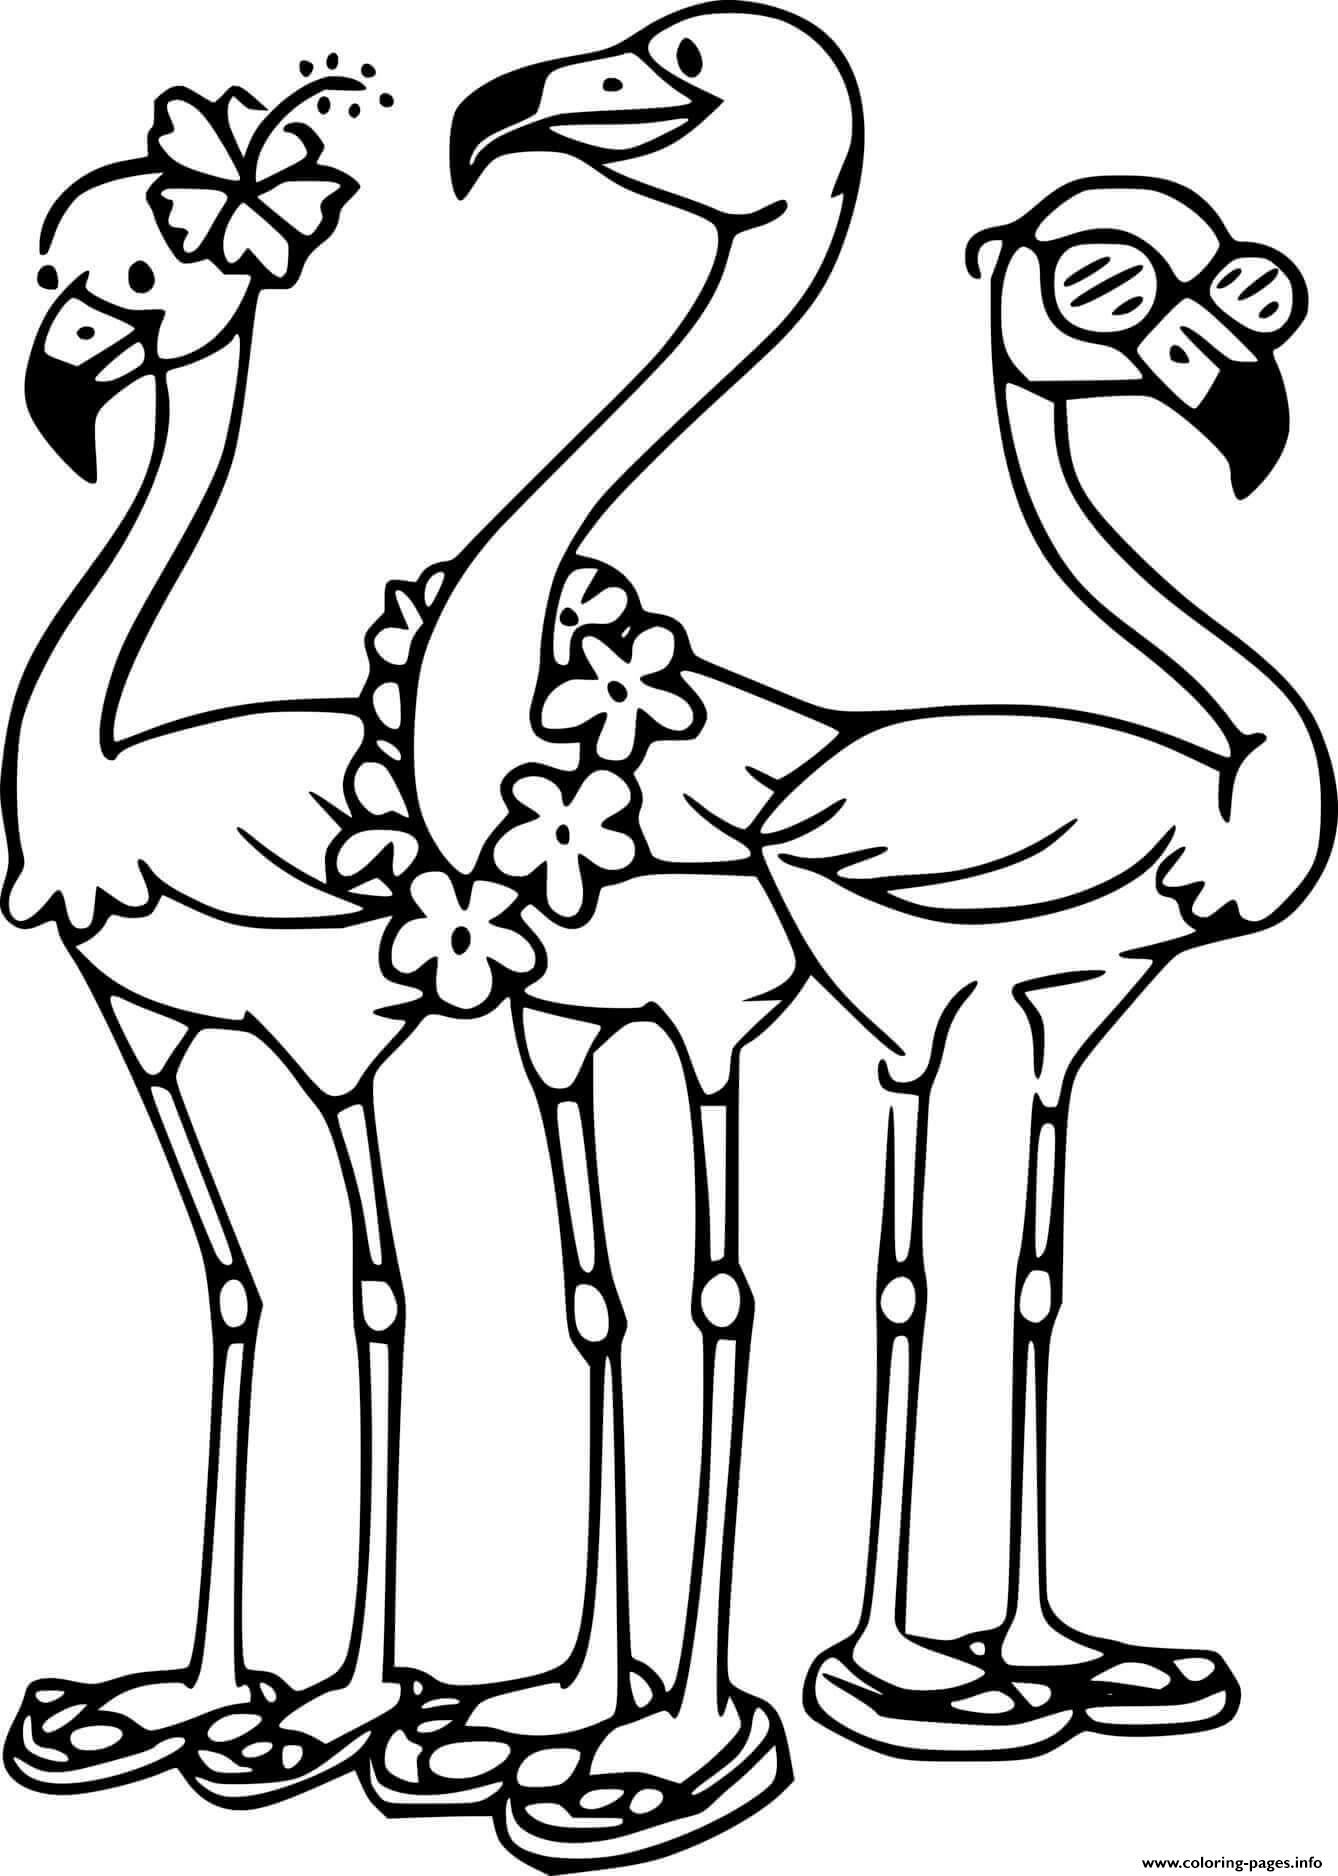 Three Cartoon Flamingos coloring